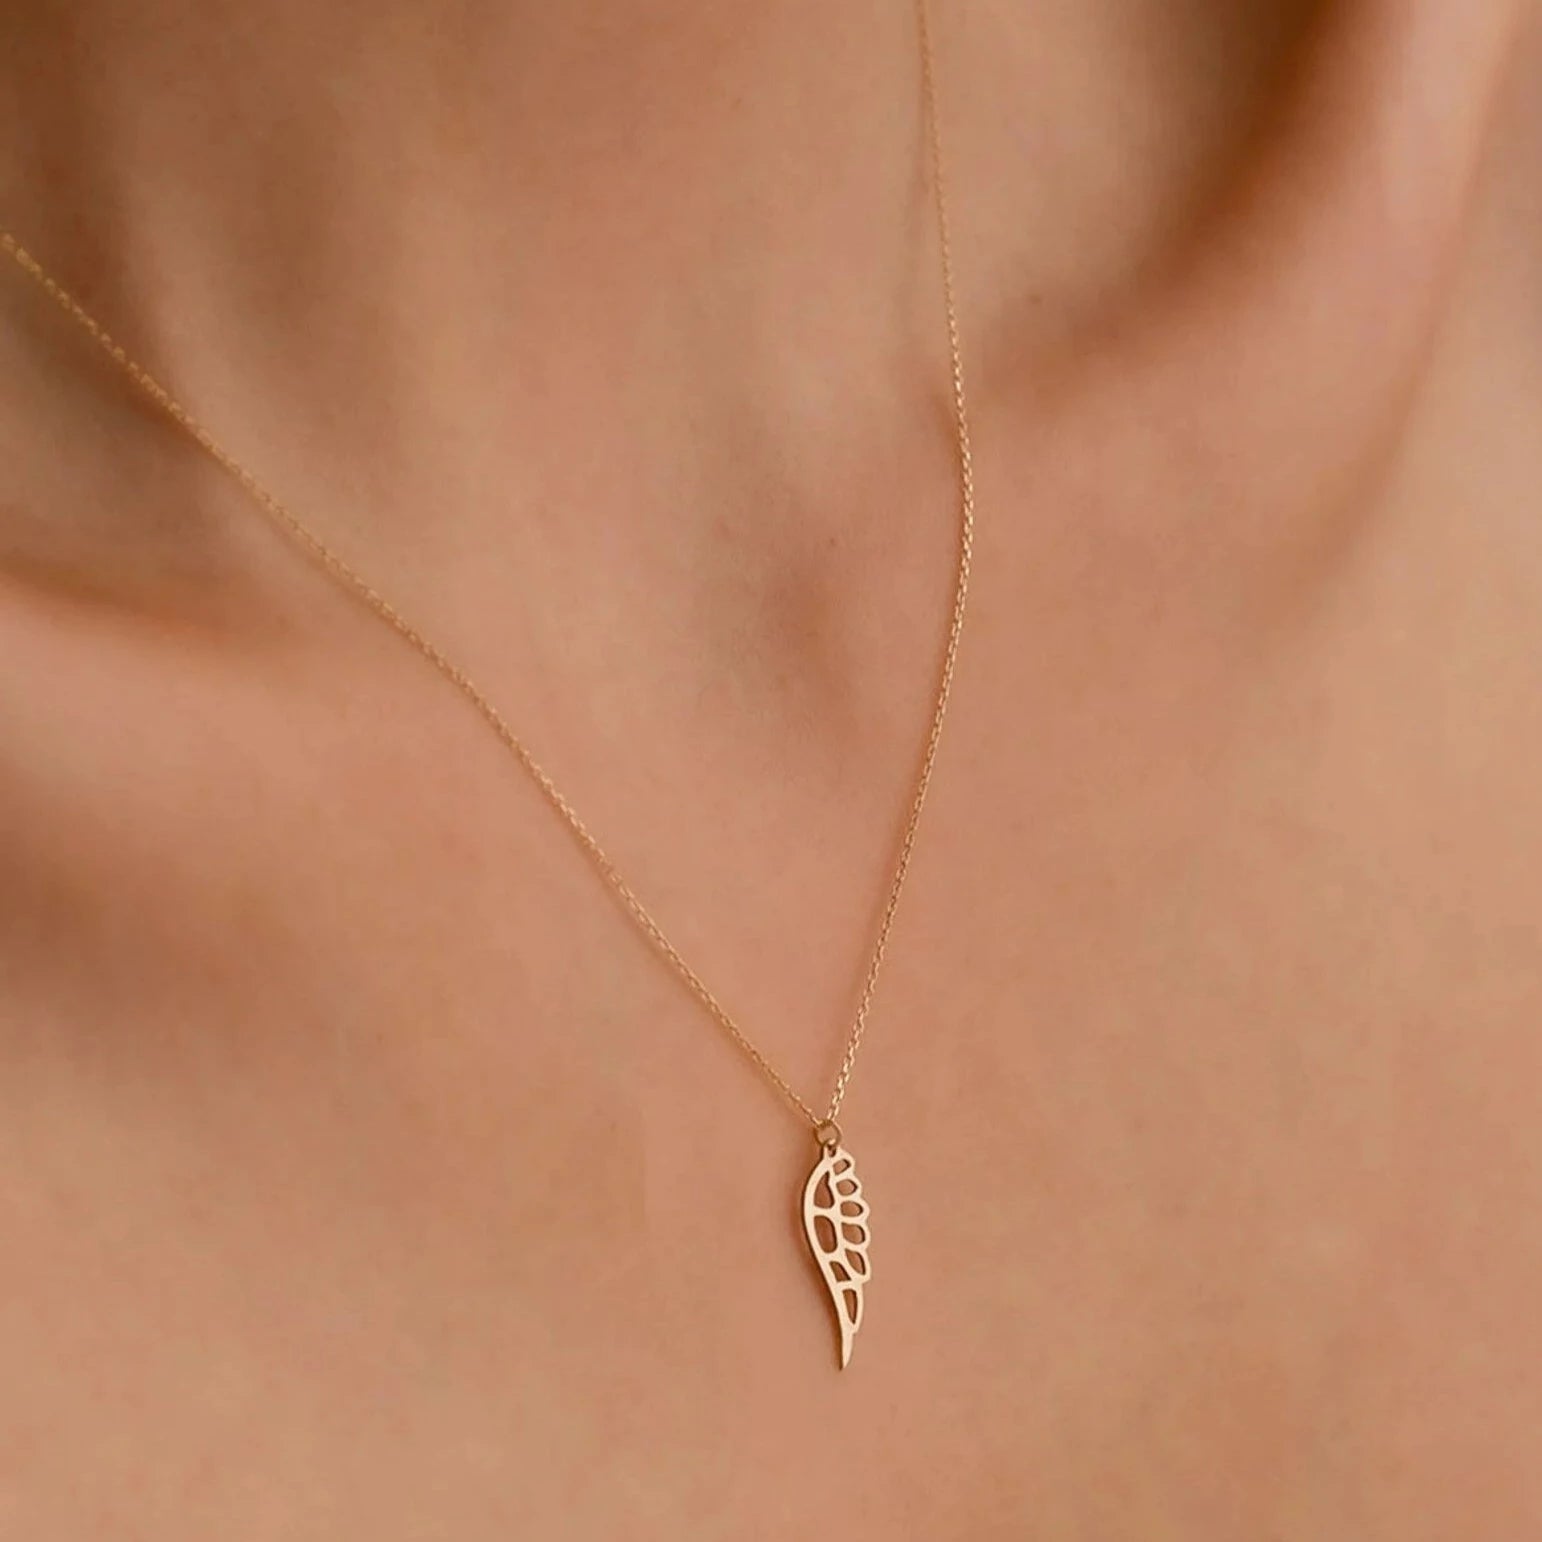 18 carat gold Angel Wing necklace - Burst of Arabia - UAE